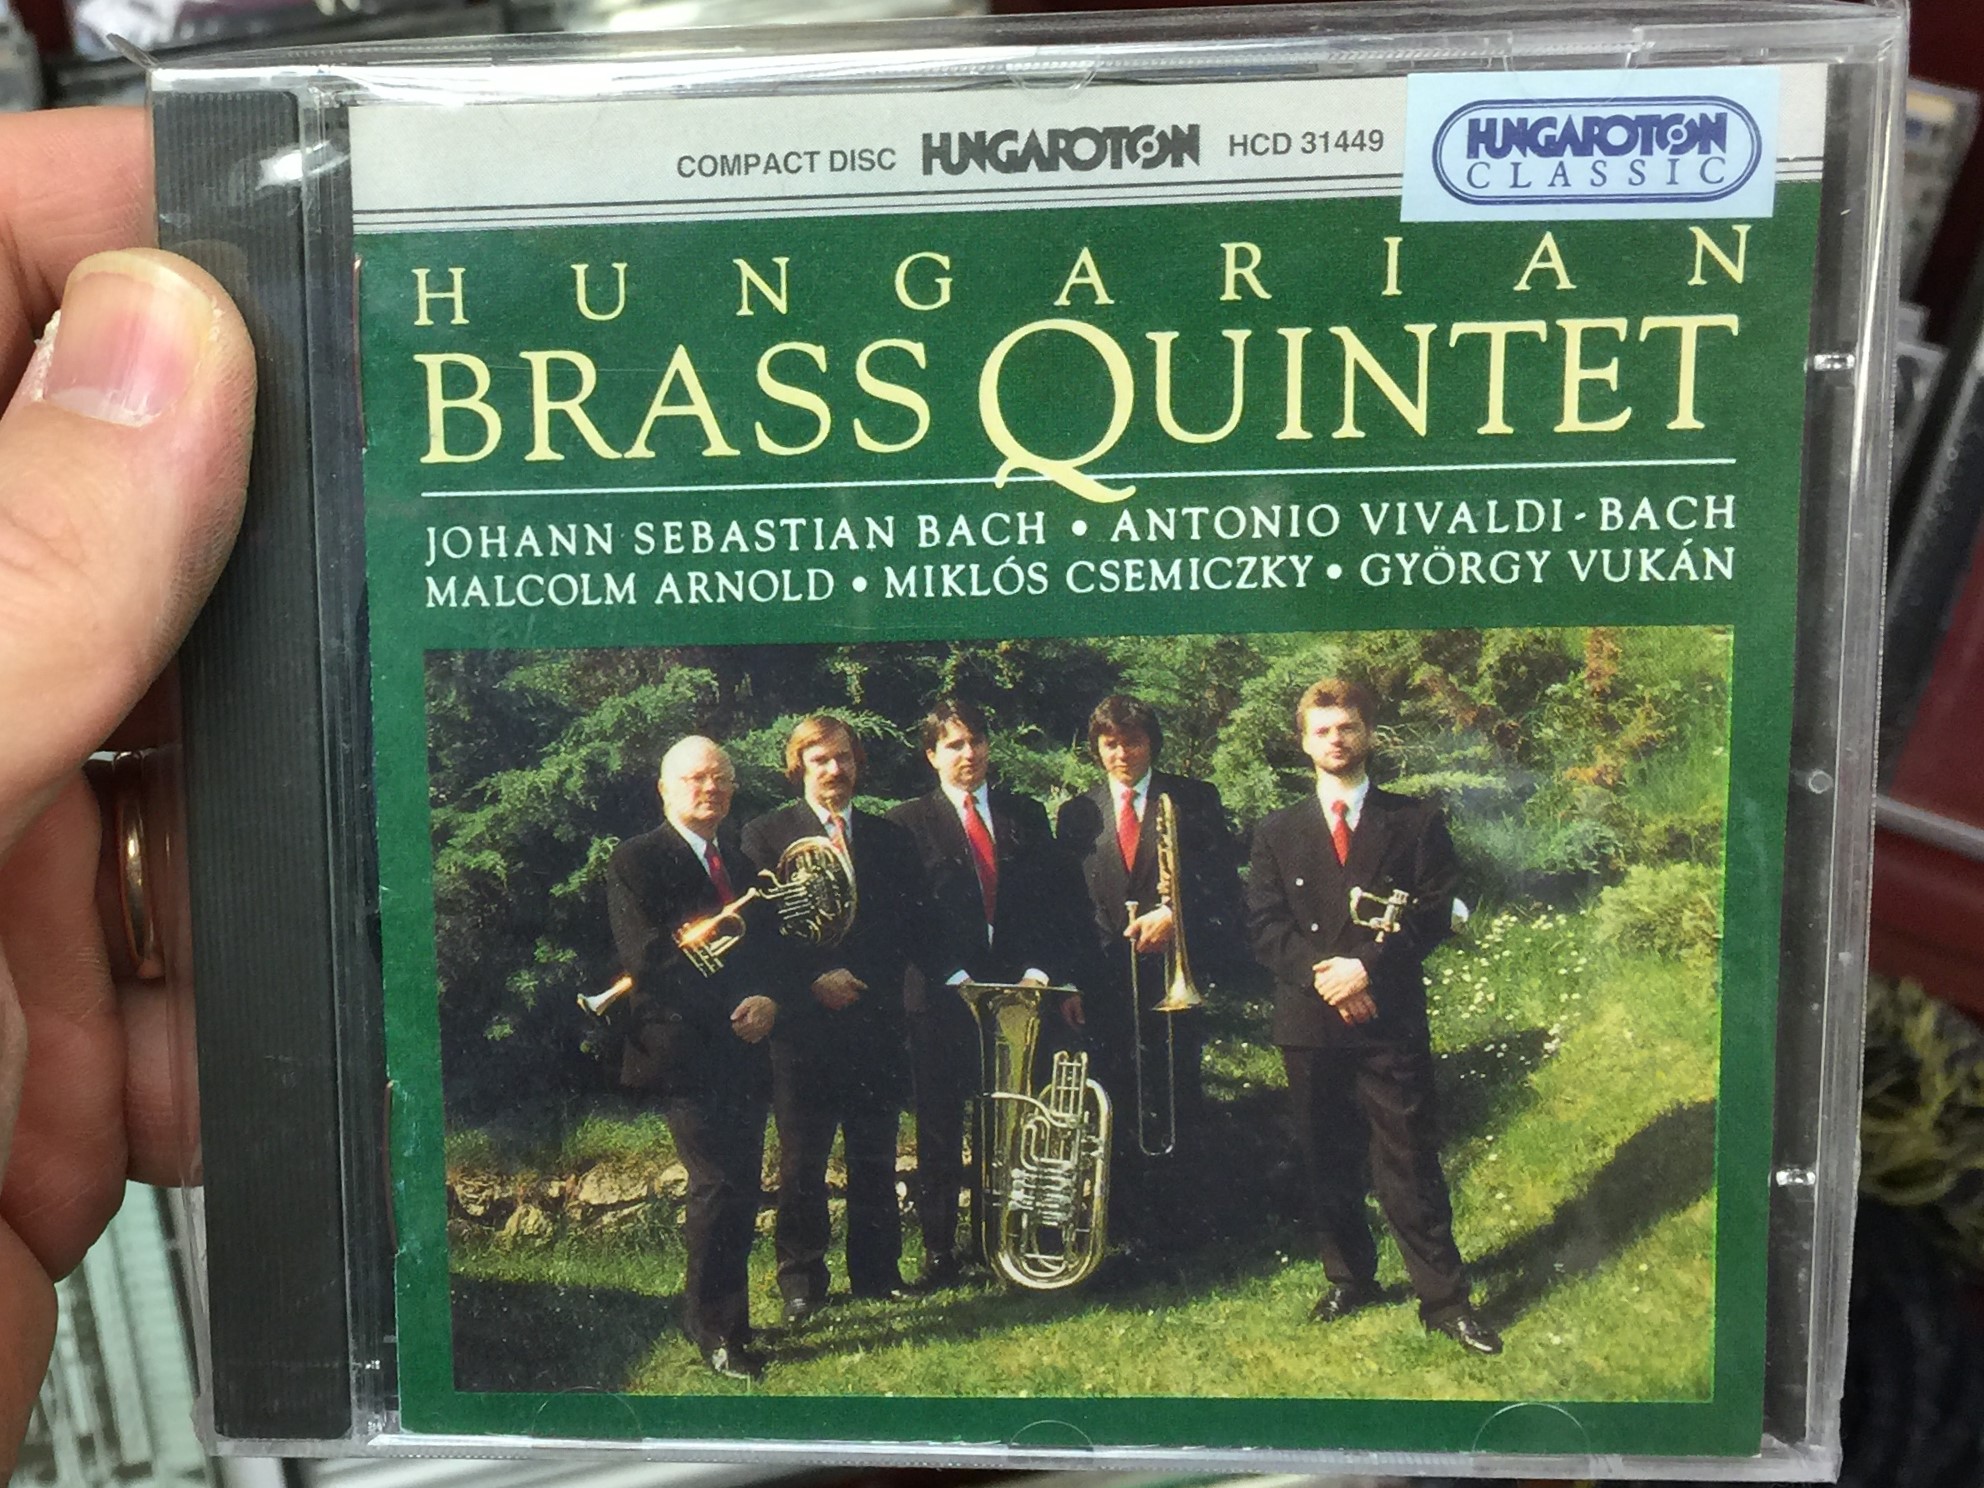 hungarian-brass-quintet-johann-sebastian-bach-antonio-vivaldi-bach-malcolm-arnold-miklos-csemiczky-gyorgy-vukan-hungaroton-classic-audio-cd-1993-hcd-31449-1-.jpg